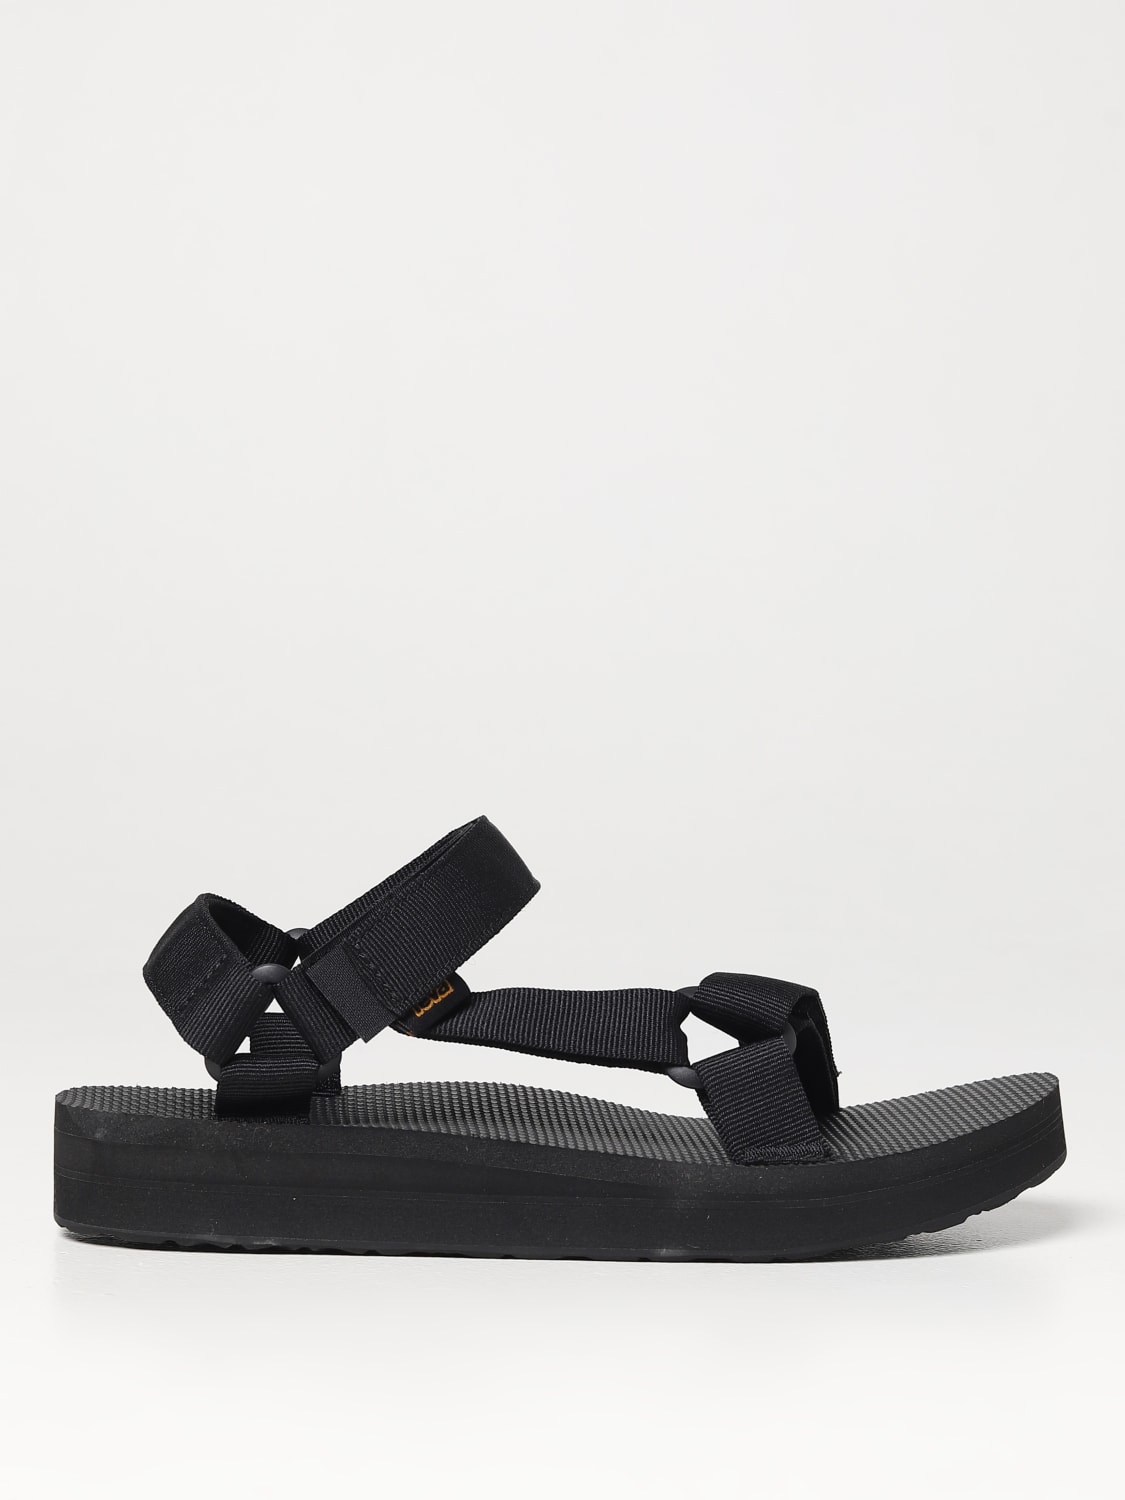 roltrap Oude tijden gebrek TEVA: sandals for man - Black | Teva sandals 1117150 online on GIGLIO.COM